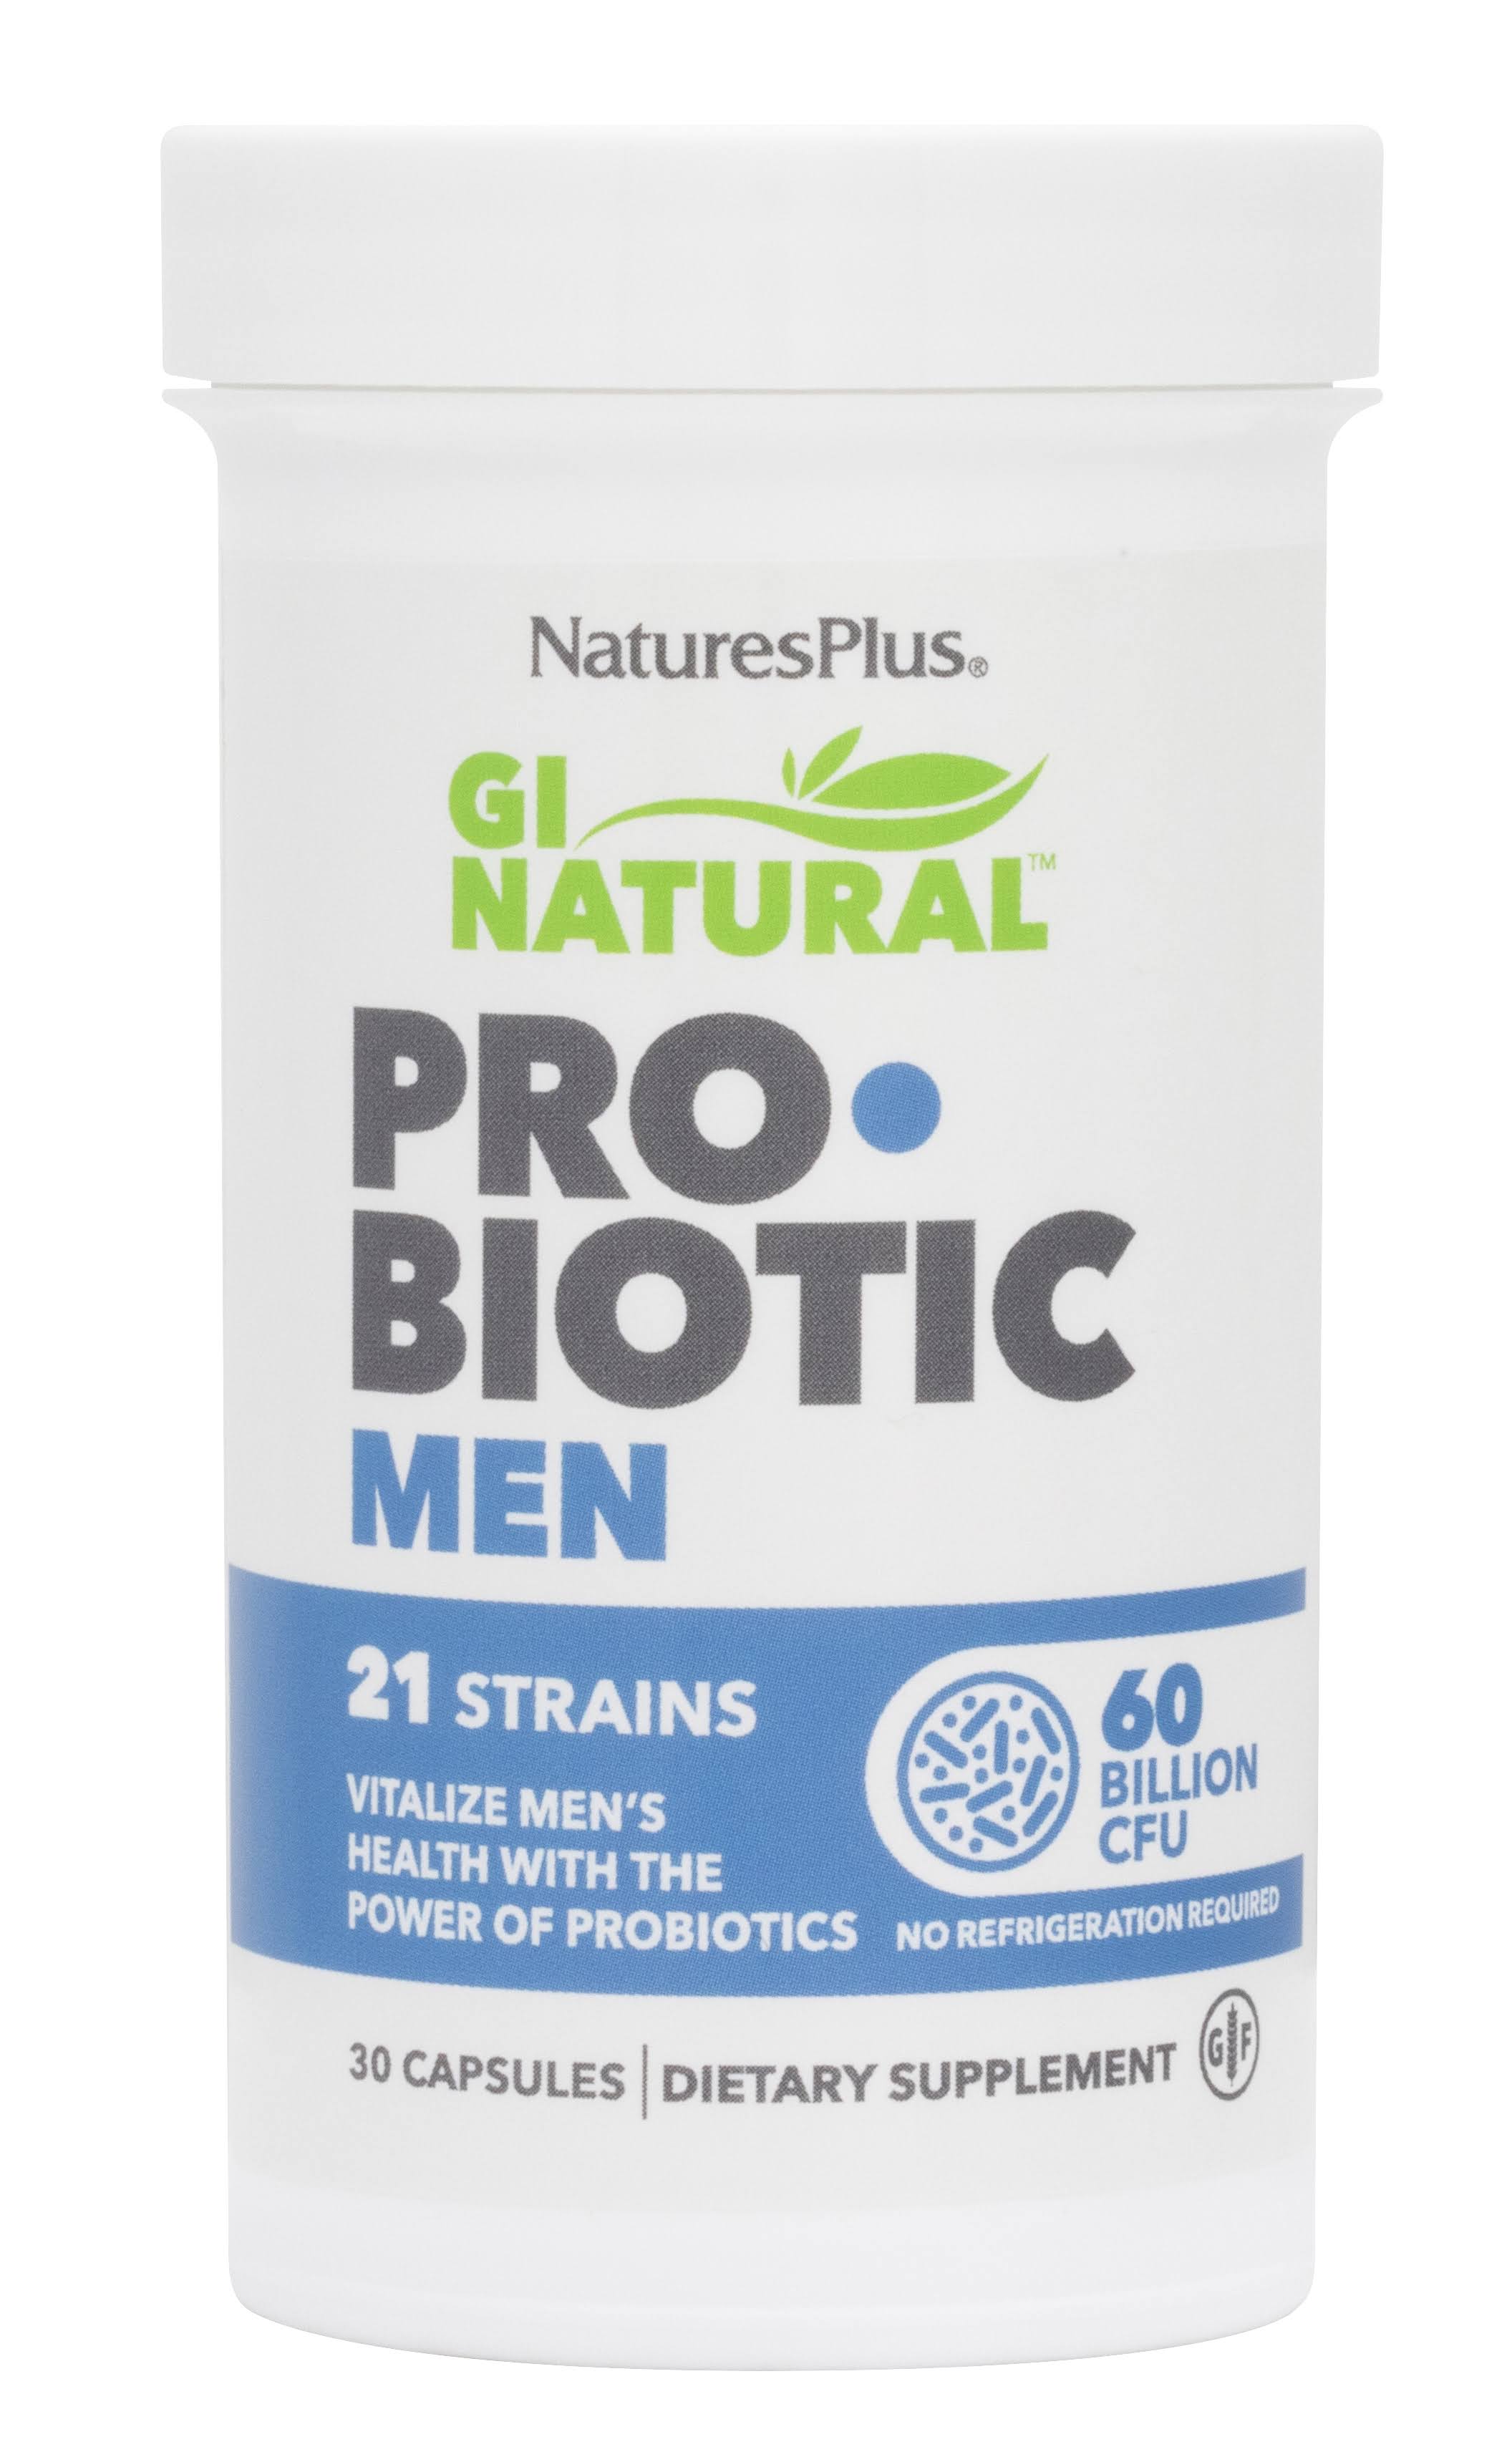 Nature's Plus - Gi Natural Probiotic Men - 30 Capsules